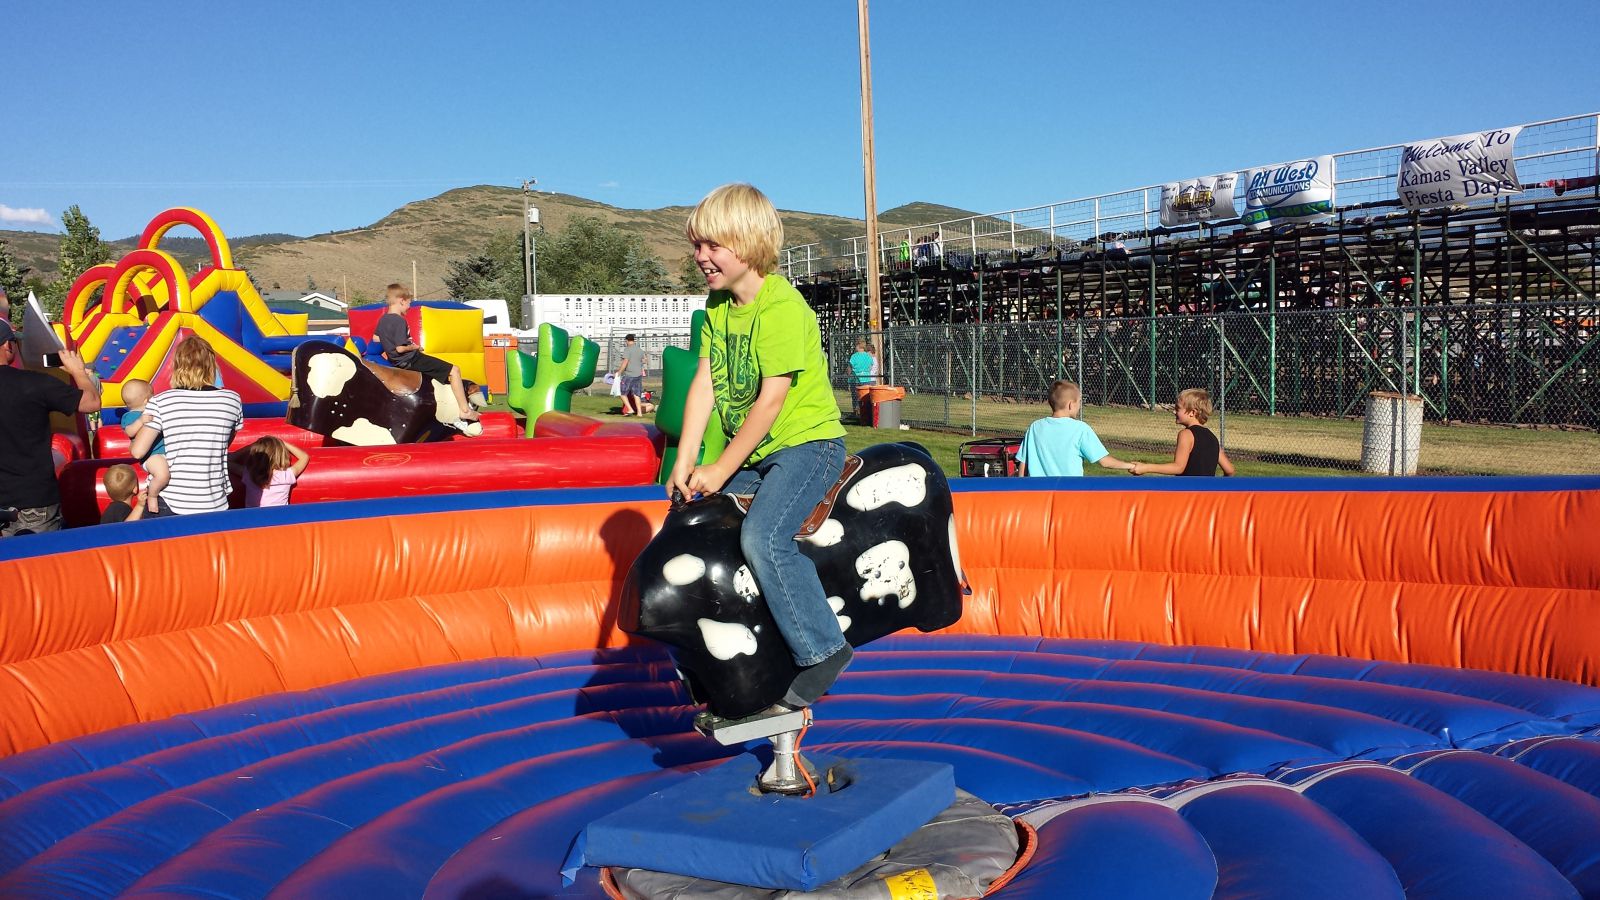 Grandson Jace working the Bull Bucking Machine at the Fiesta Day Celebration in Kamas Valley, Utah.